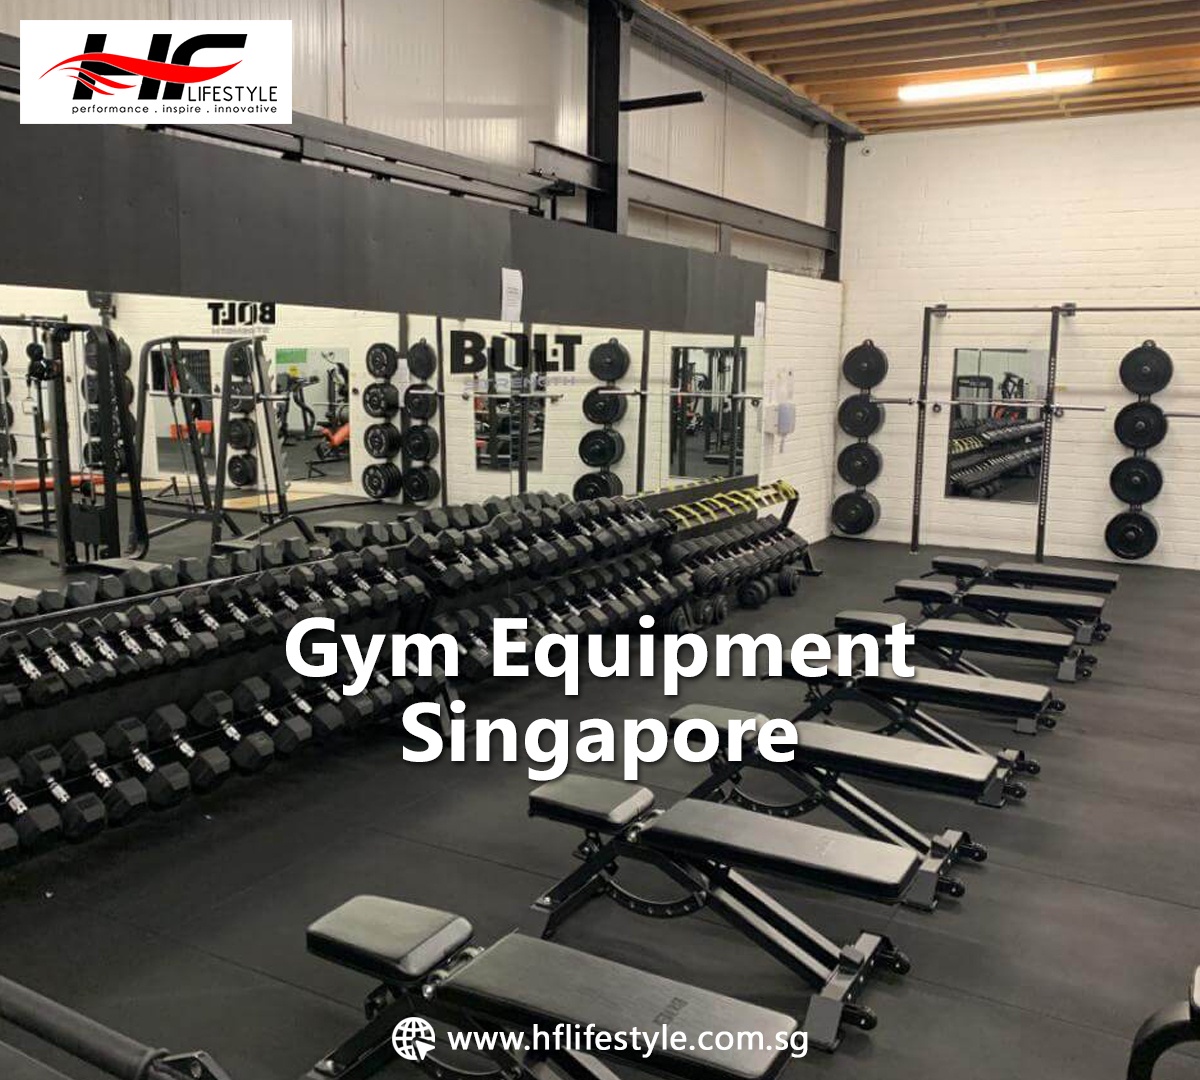 HF Lifestyle: Your Ultimate Destination for Premium Gym Equipment